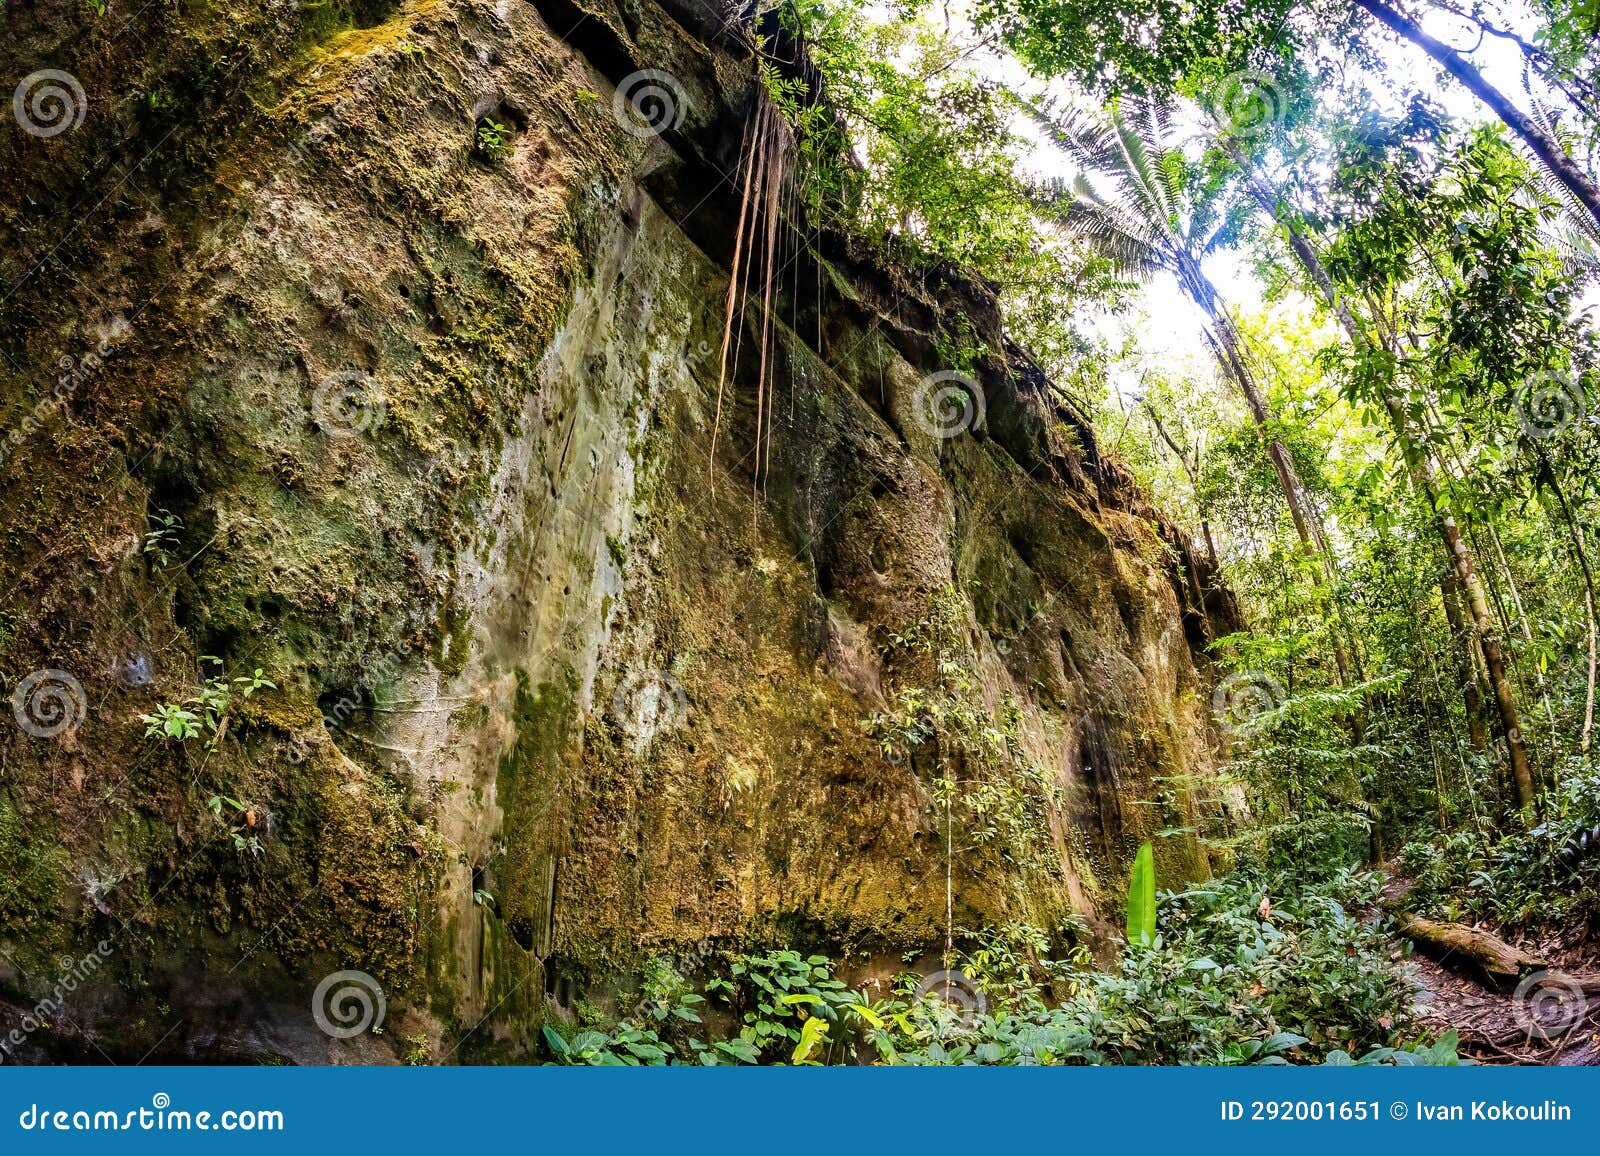 view of maroaga cave in jungle at presidente figueiredo brazil